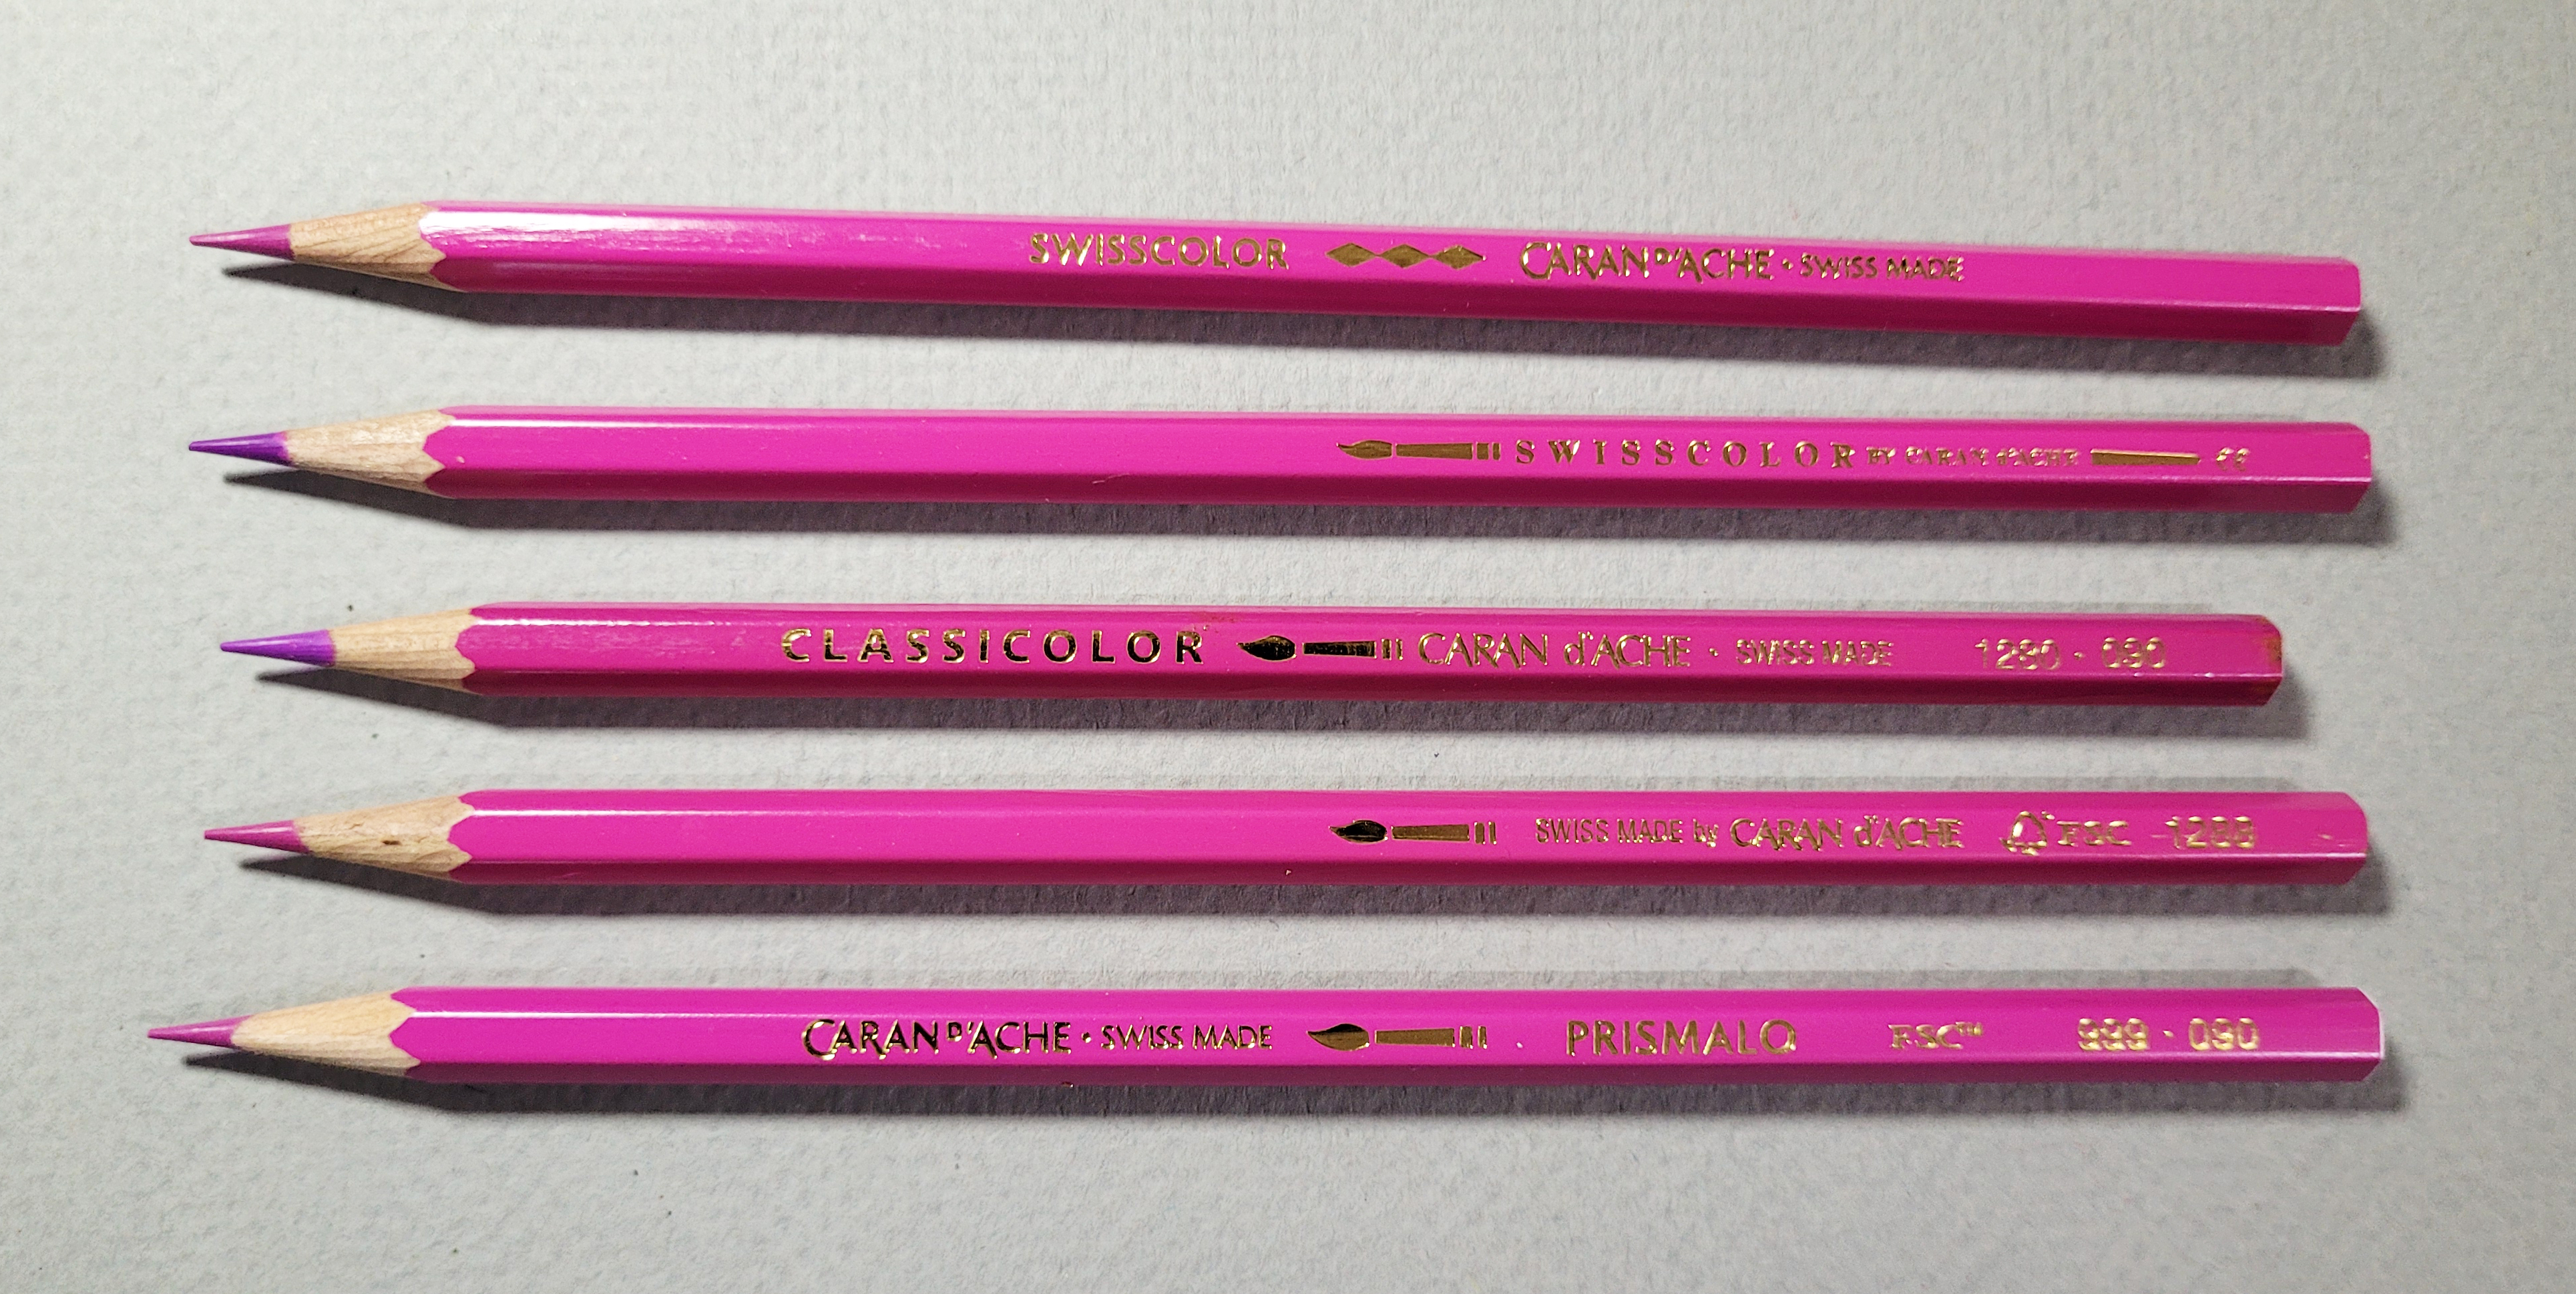 Caran d'Ache Swisscolor Water-Soluble Colored Pencil Sets